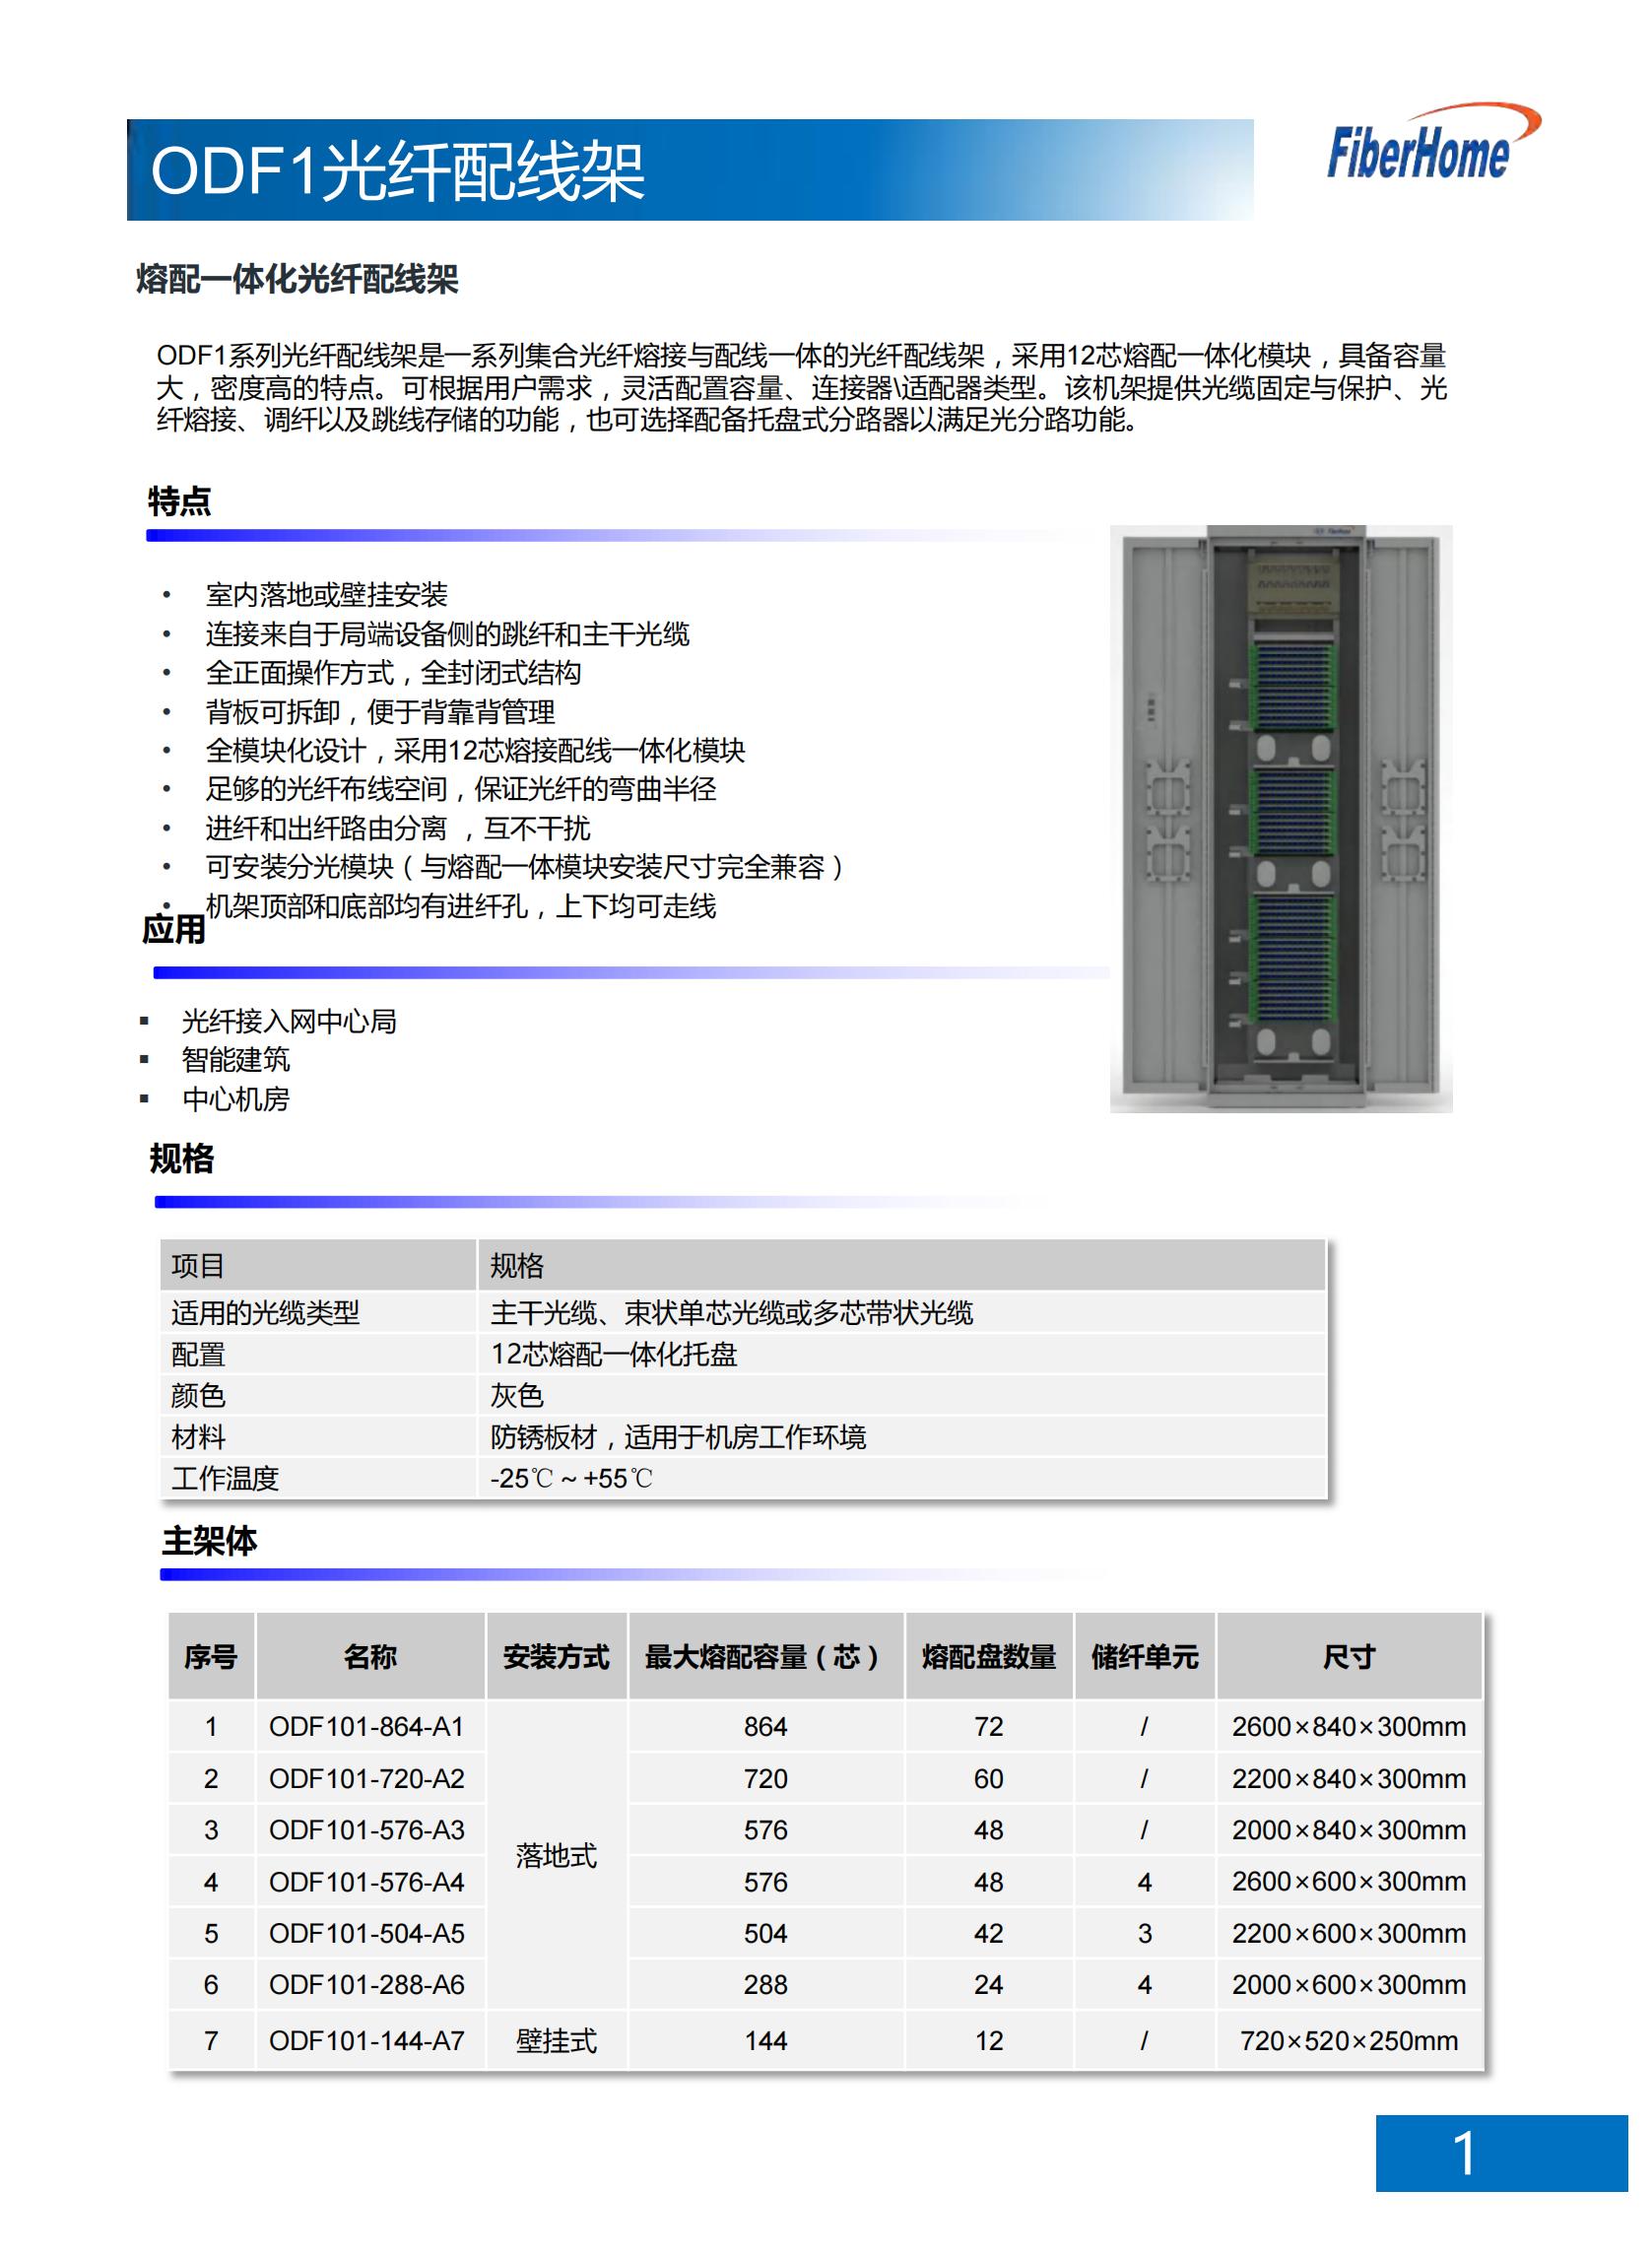 ODF101-504-A5 ODF光纤配线架 （504芯落地式 无子框型 不带熔纤盘）